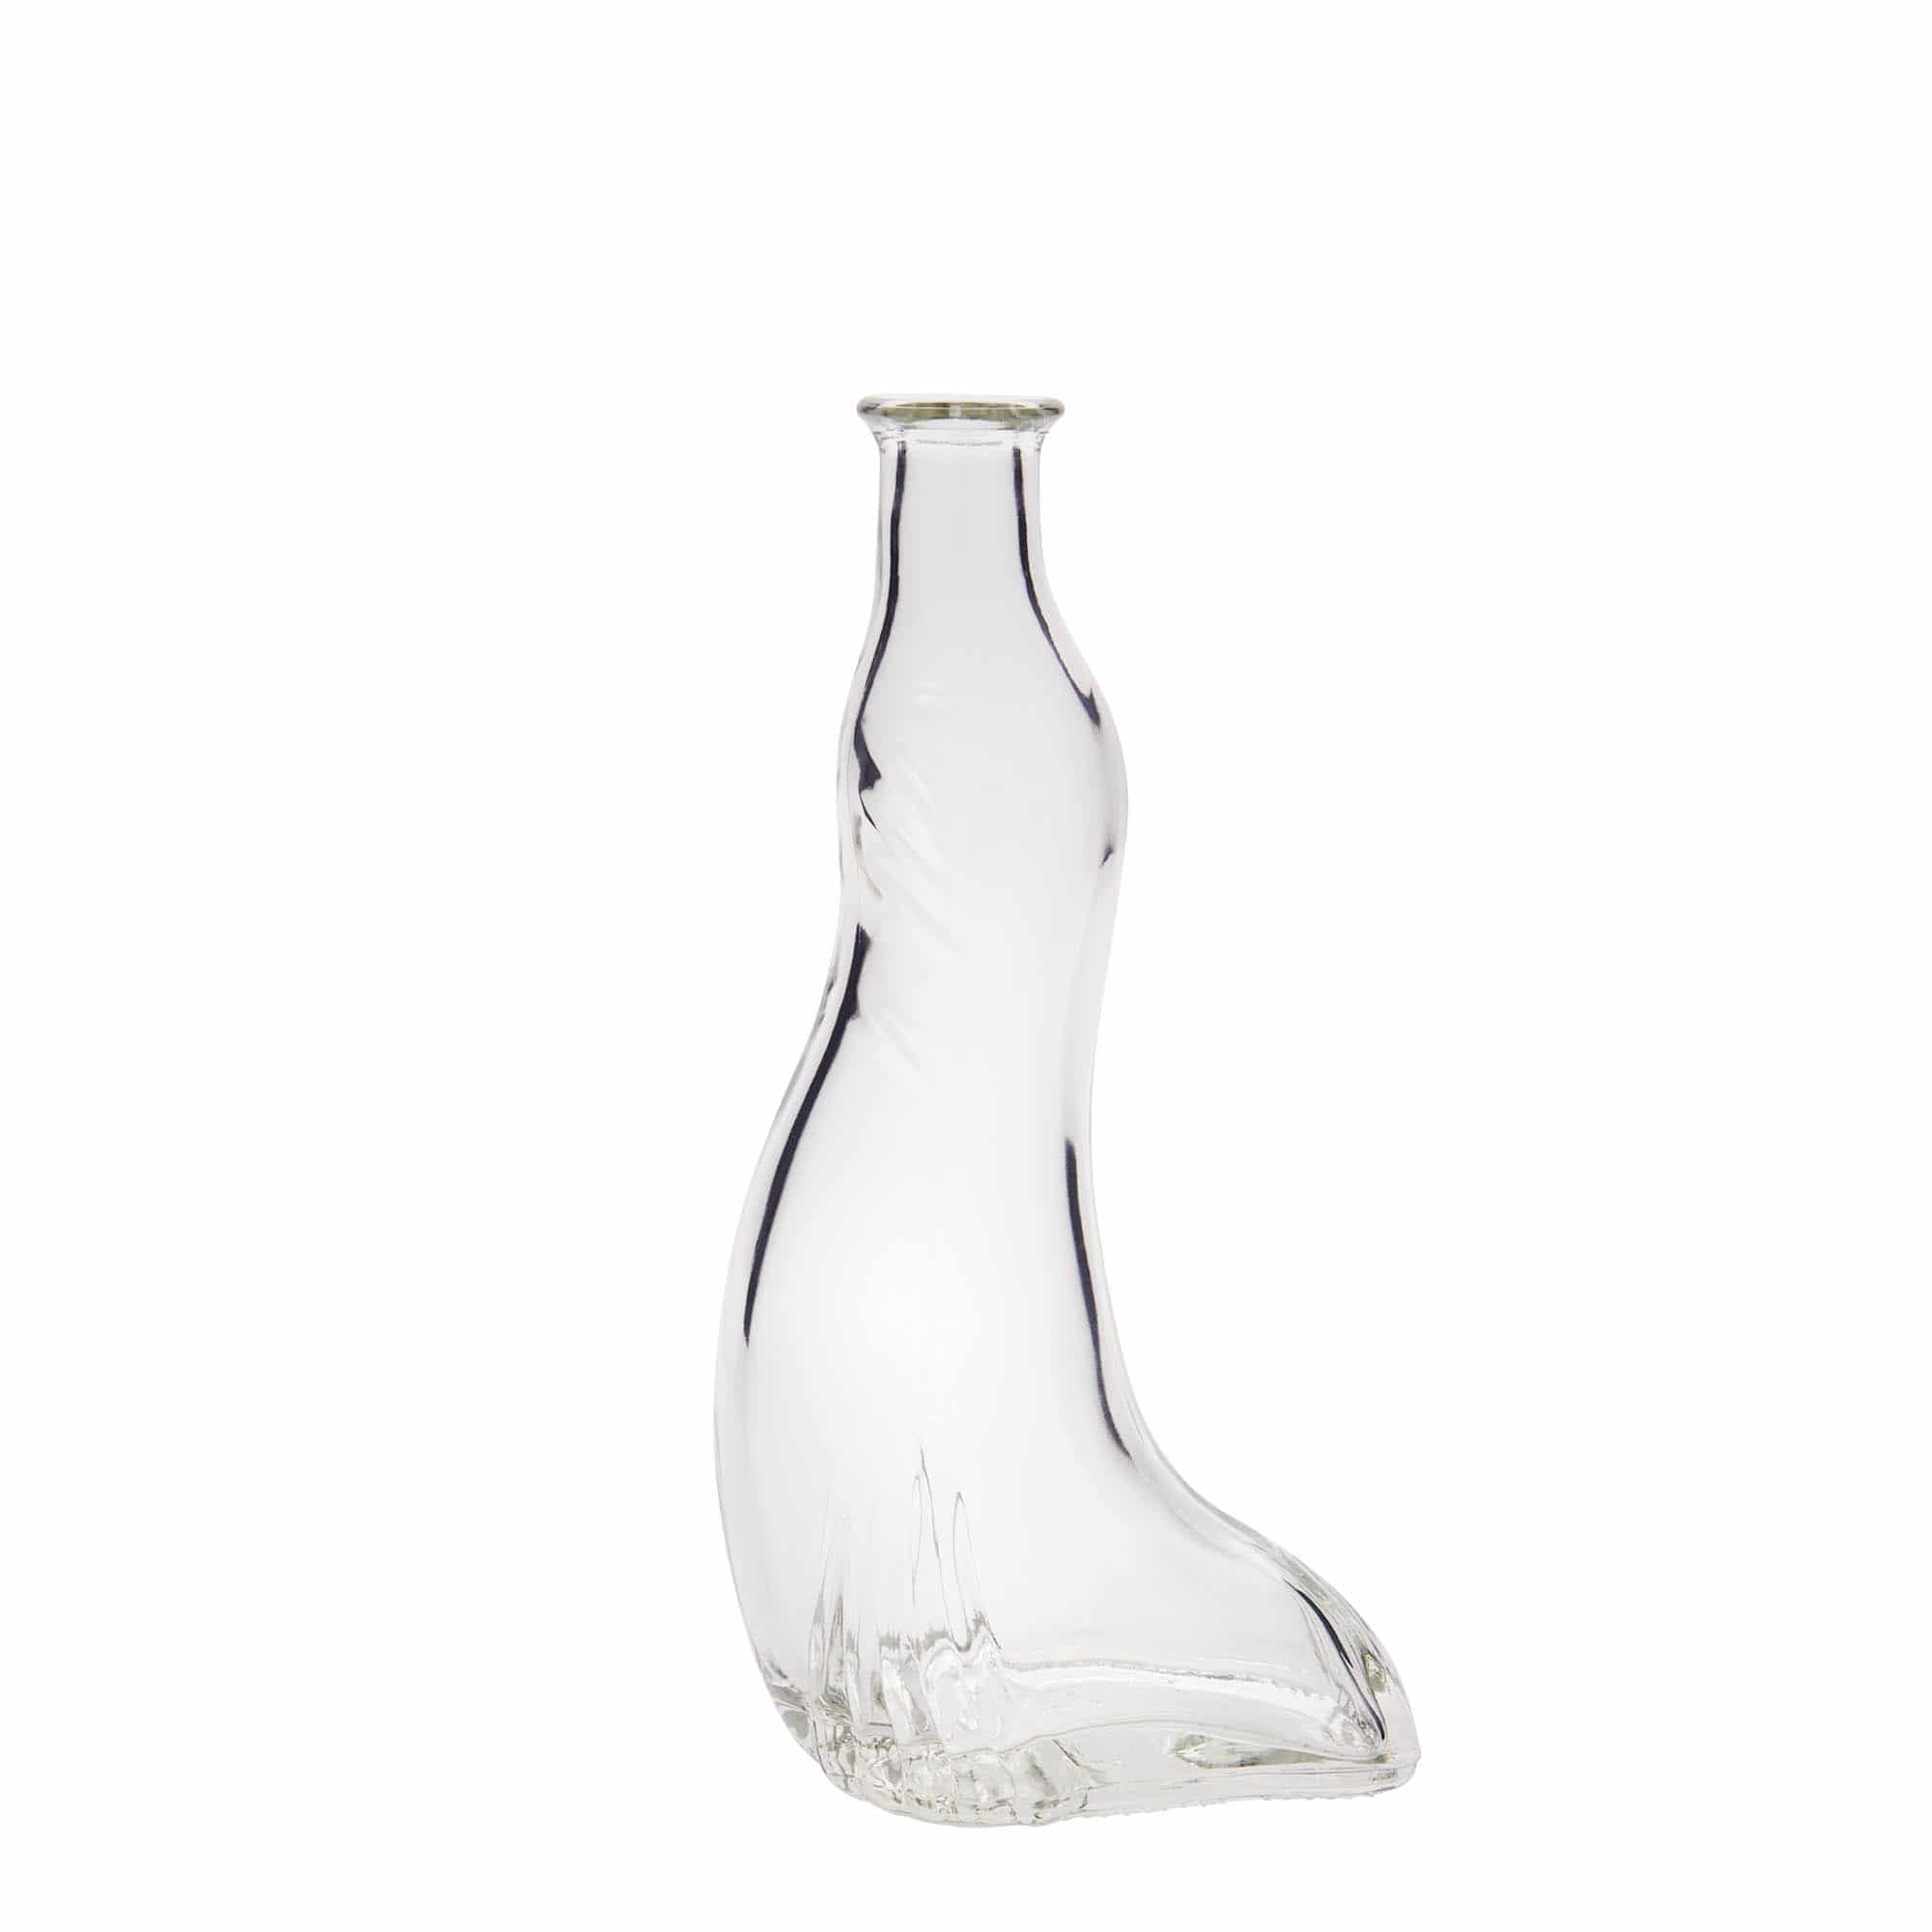 200 ml glass bottle 'Seal', closure: cork